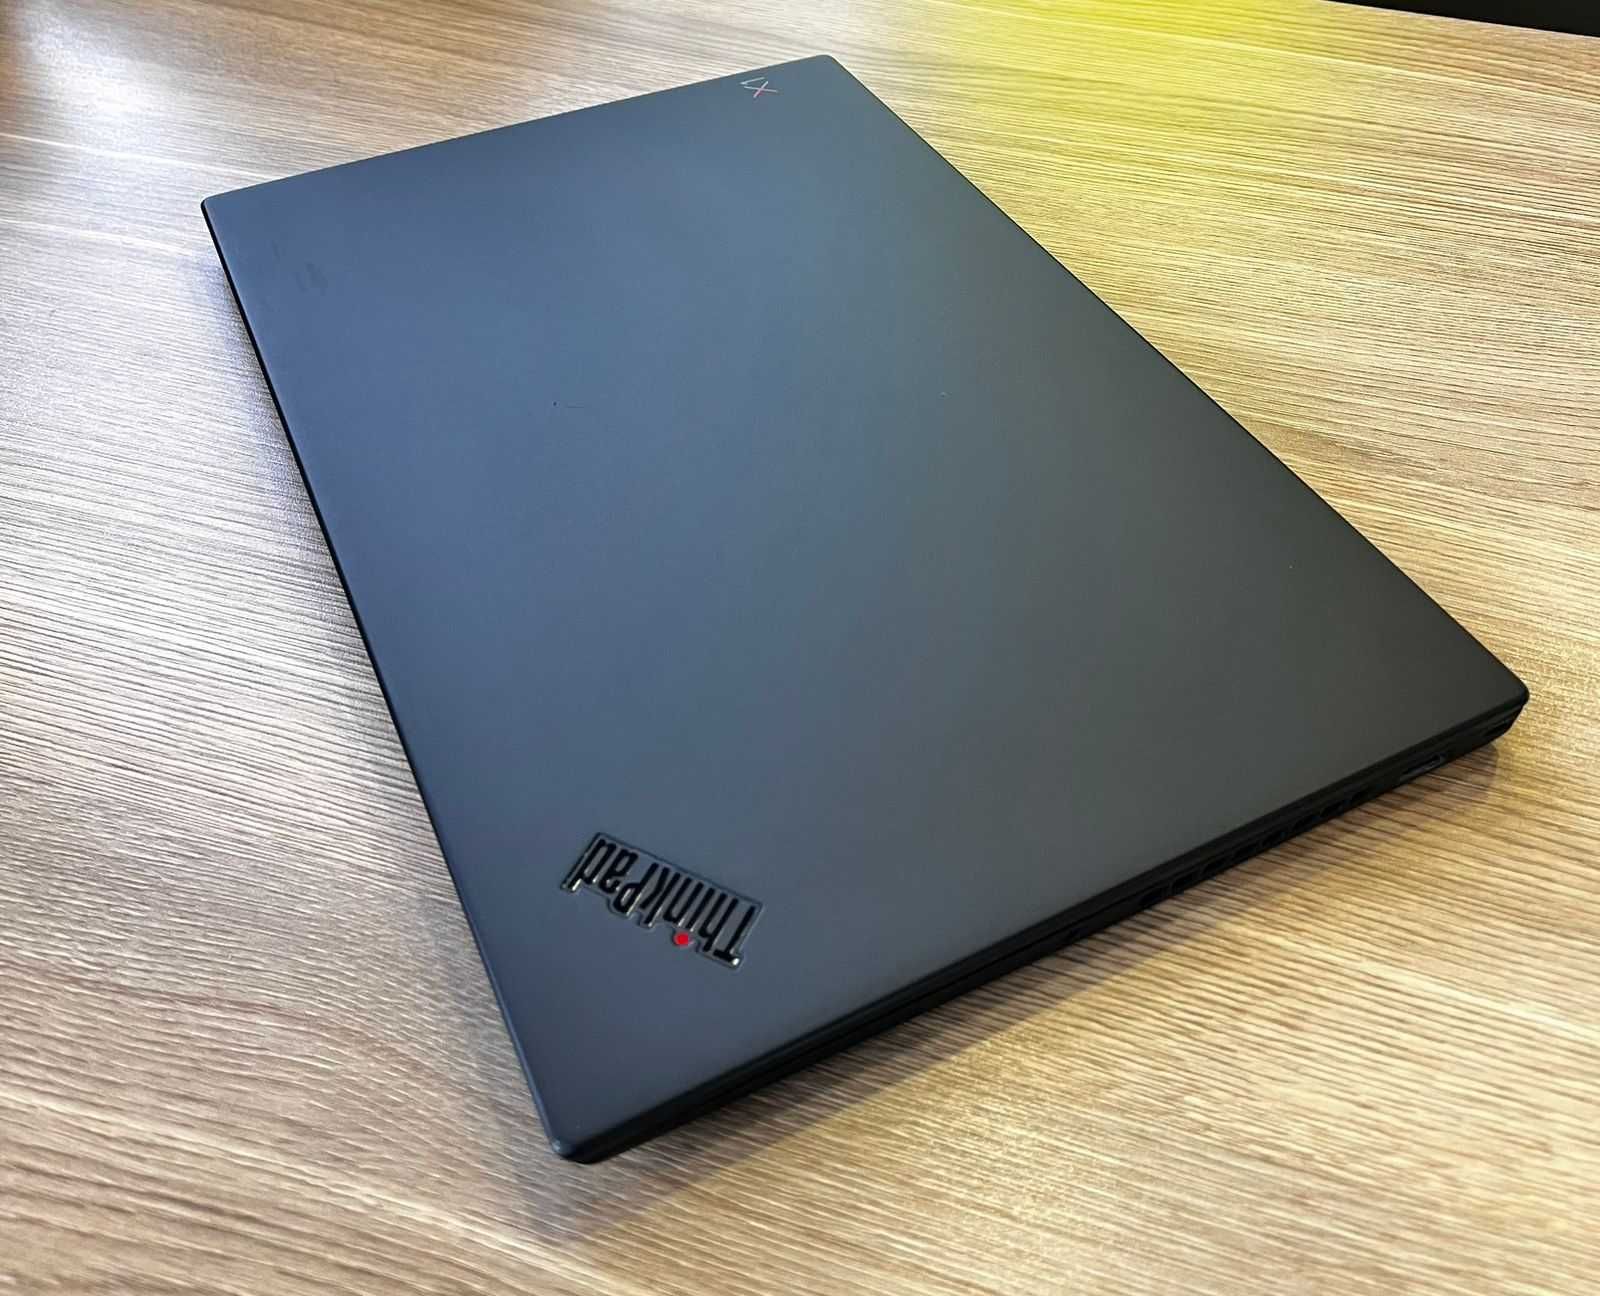 Lenovo ThinkPad X1 Carbon Gen 6. Сore i5 8350U - 1,7/3,6 Ghz 4/8